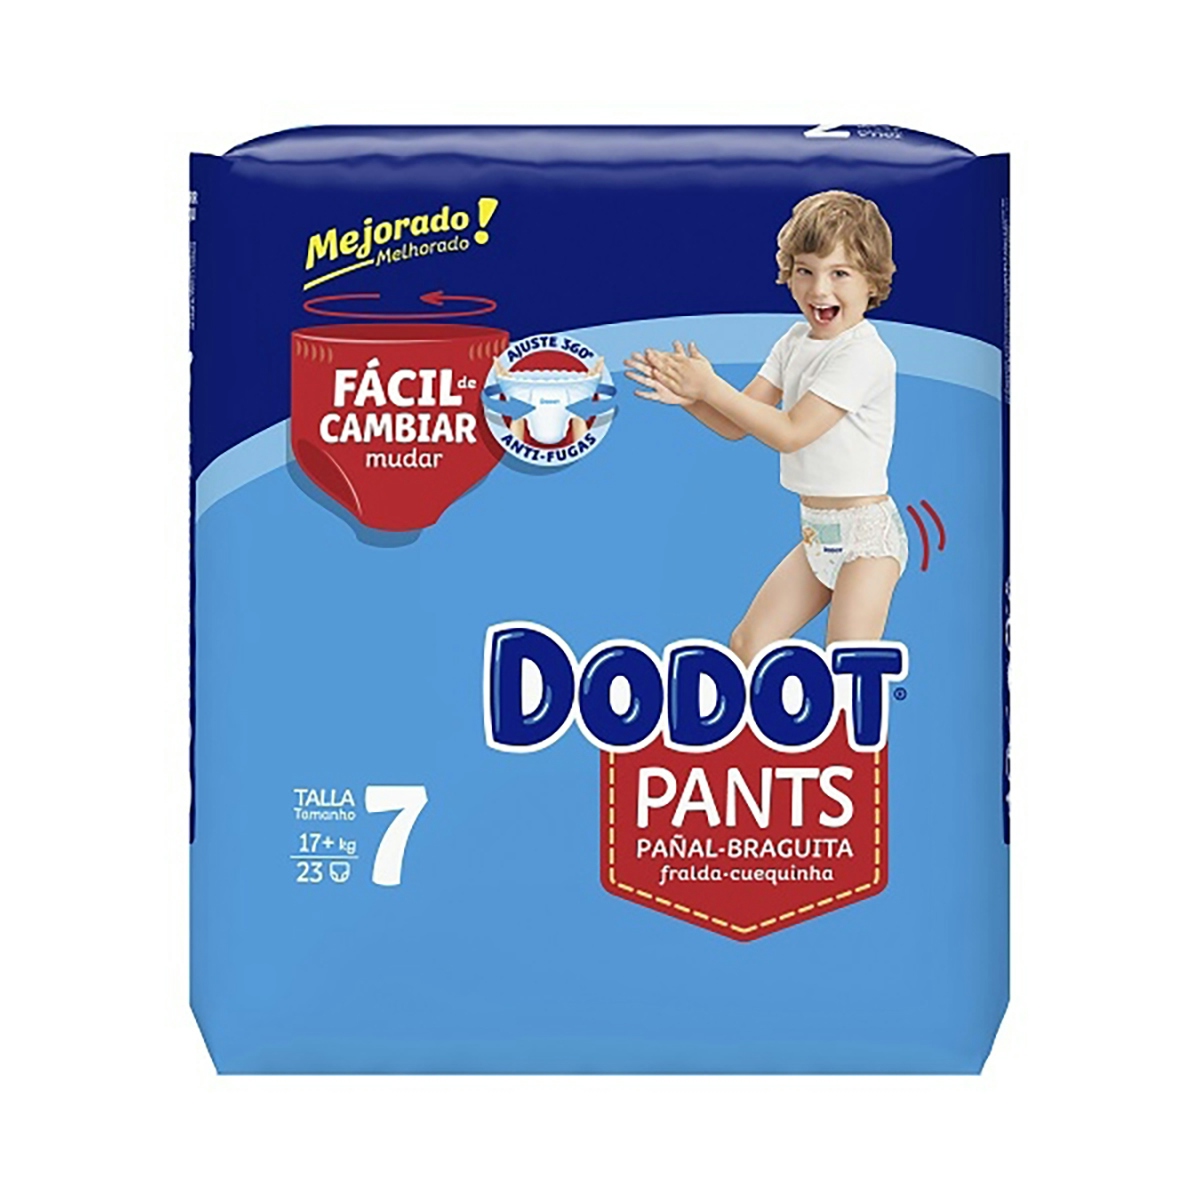 Dodot Pants Pañal-Braguita Talla 7, 23 Pañales, 17kg+